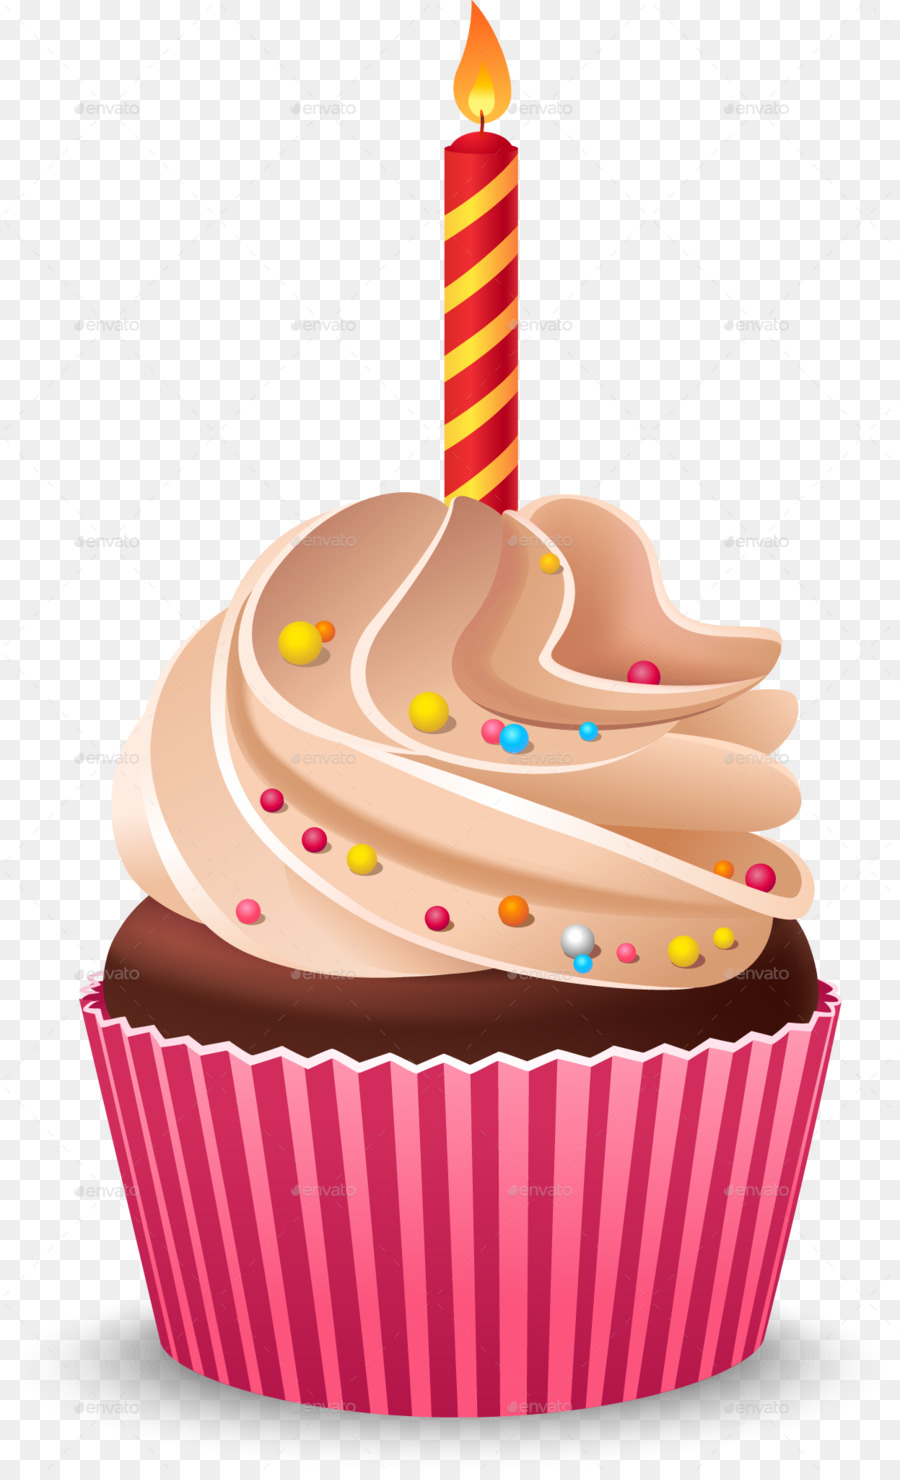 Cupcake Birthday cake Cream Muffin - birthday cake png download - 1247*2045 - Free Transparent Cupcake png Download.